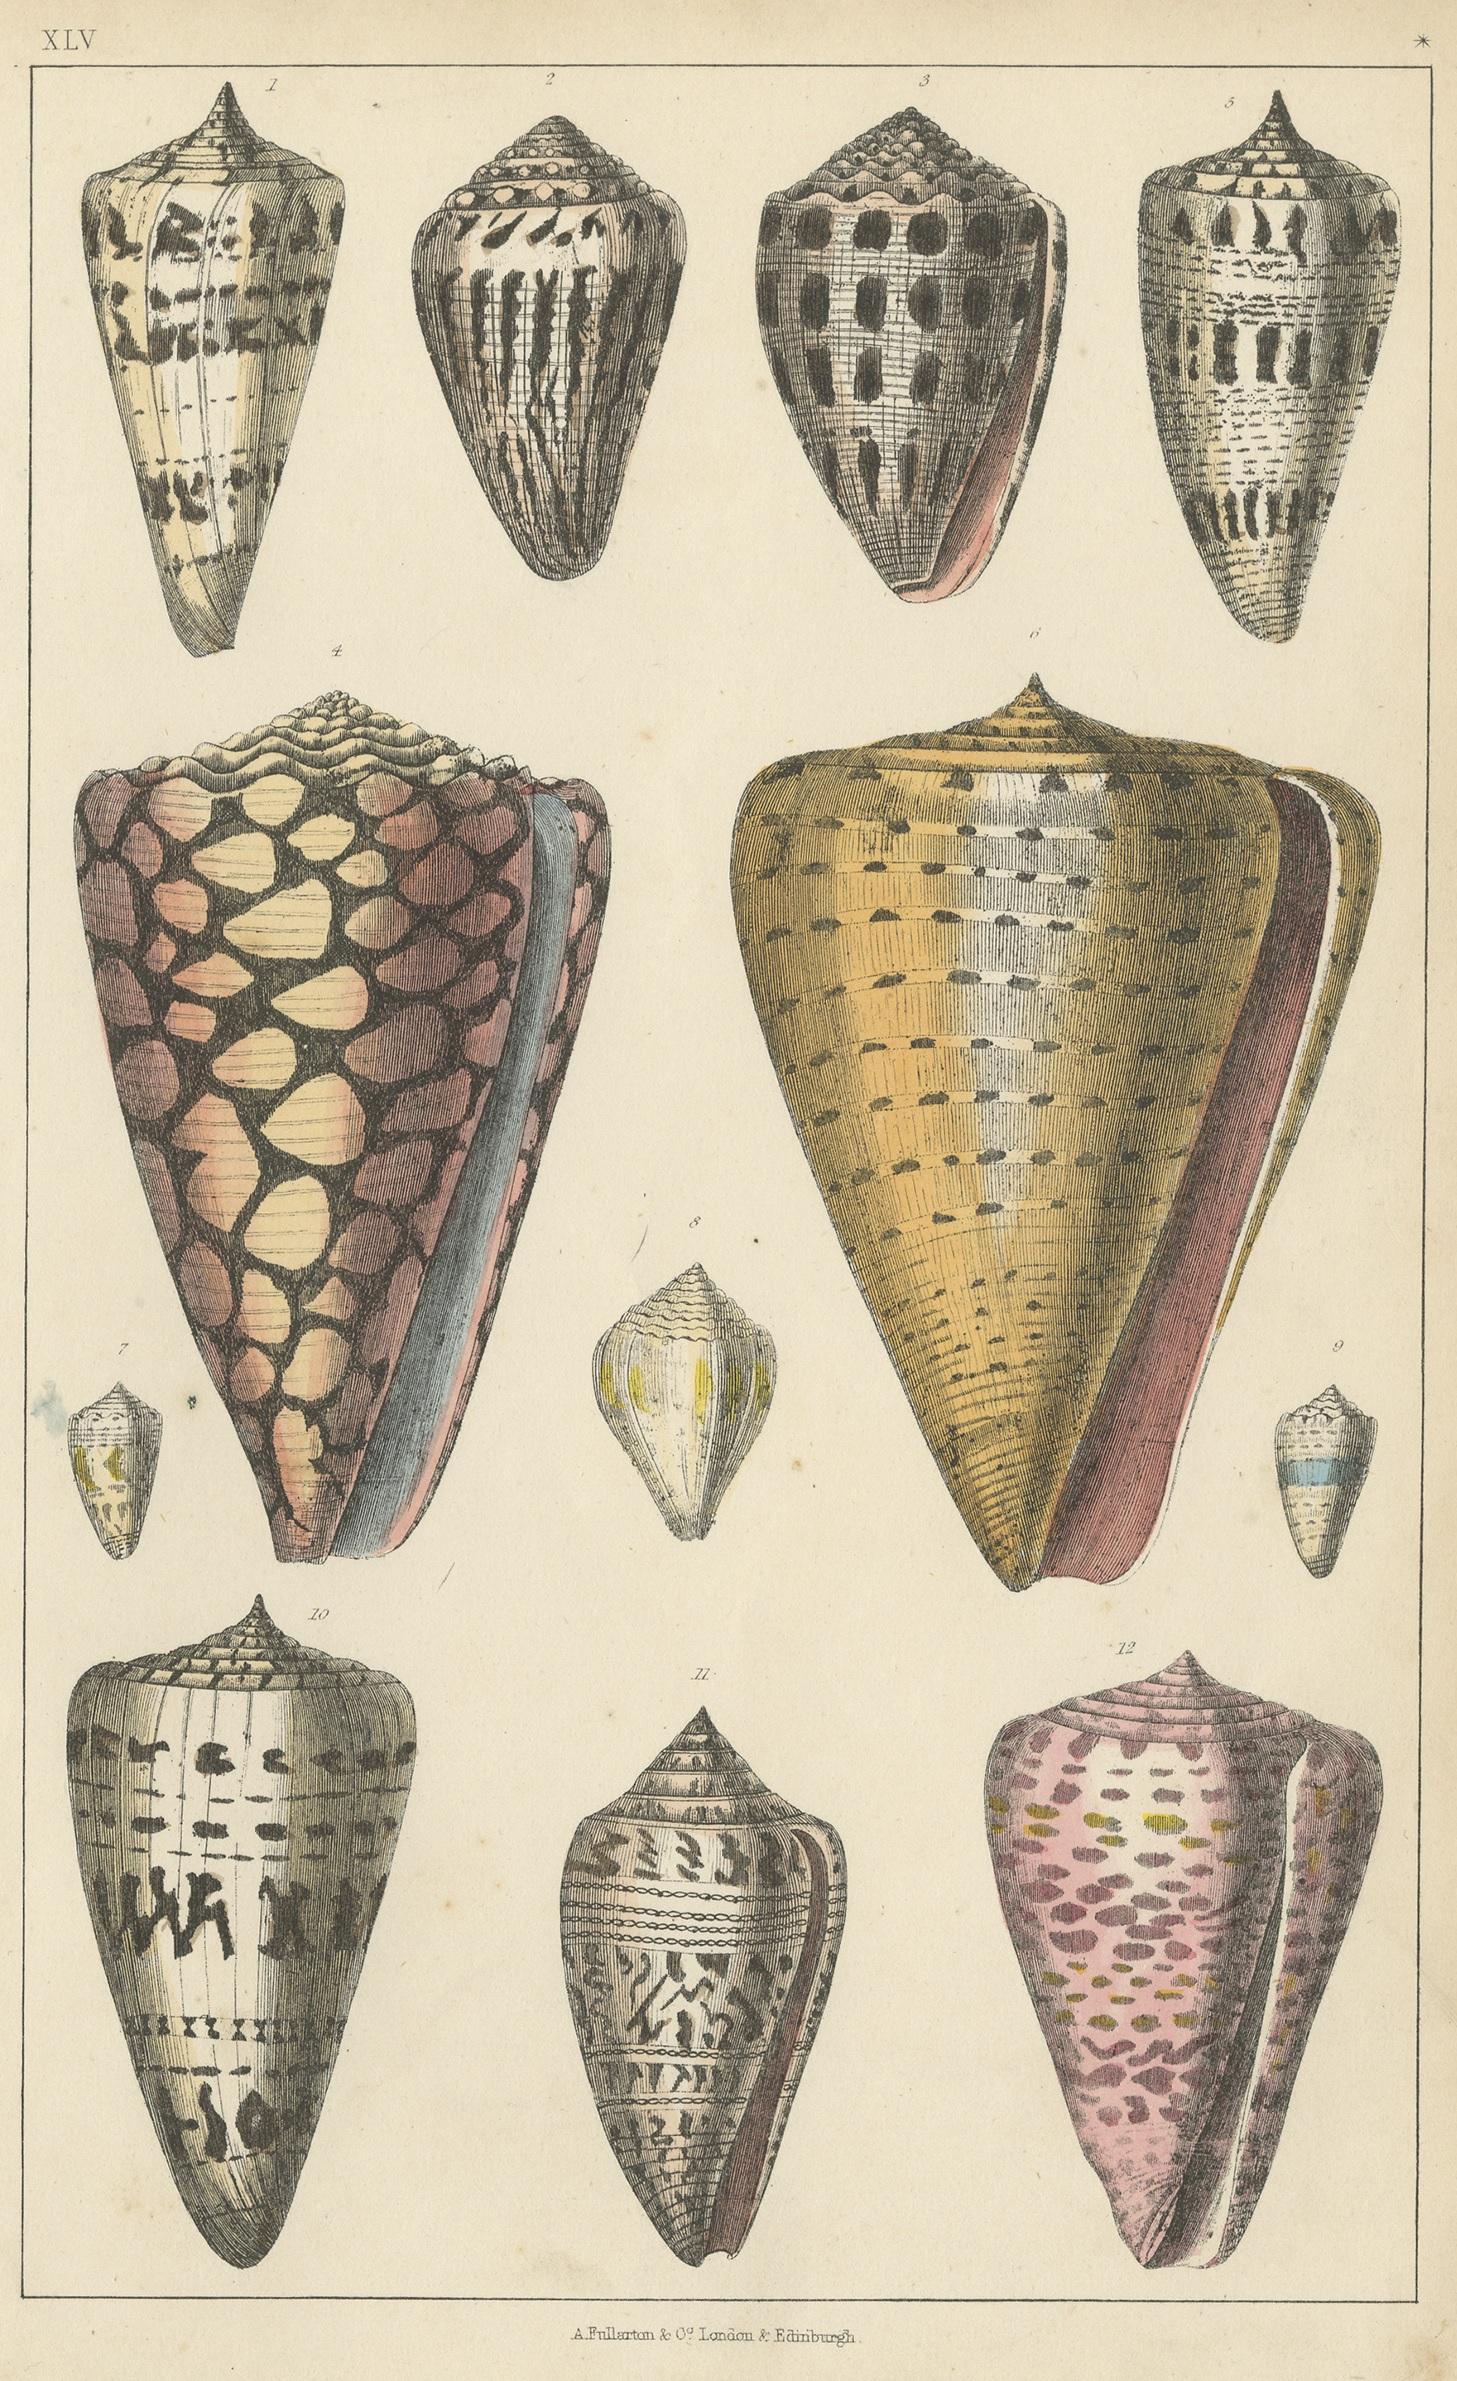 Untitled print (Pl. XLV) depicting various seashells. This print originates from 